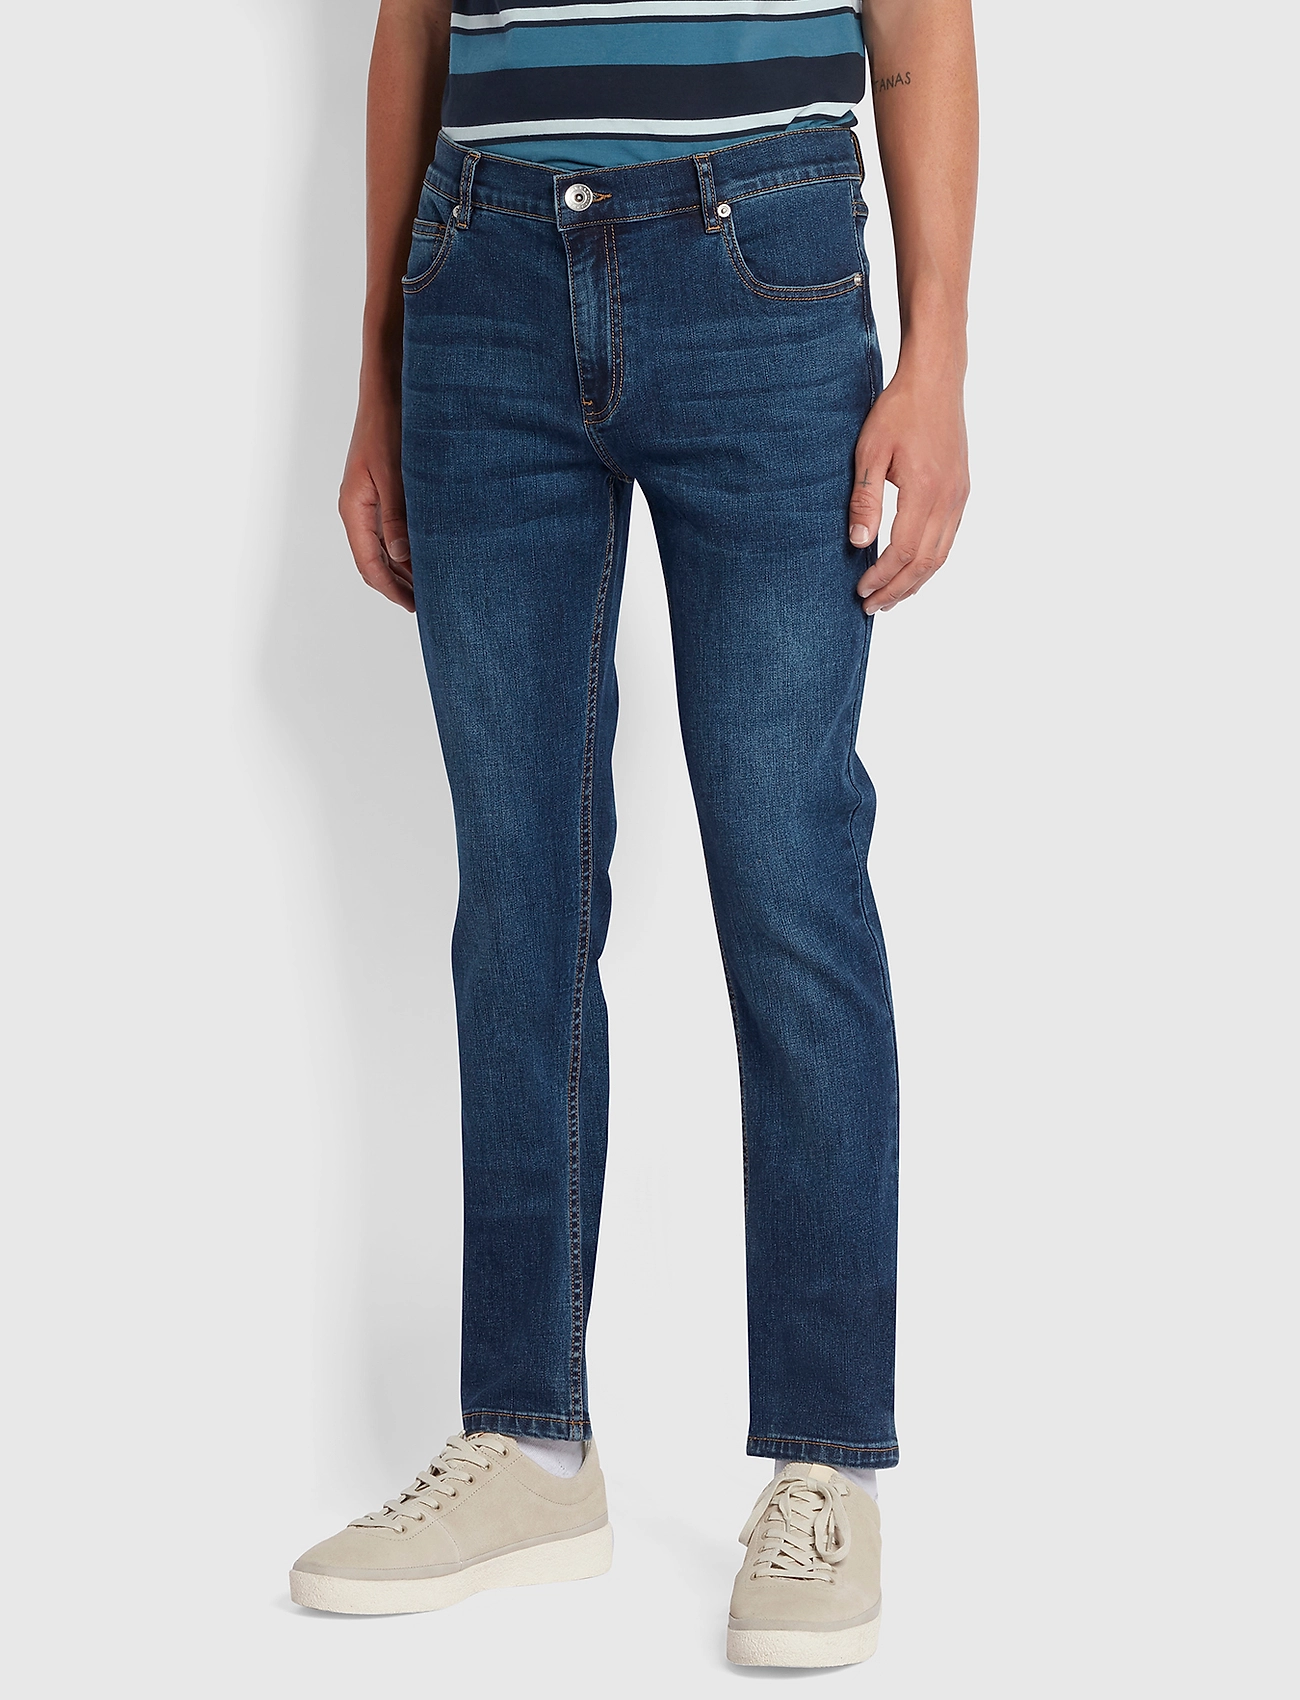 Farah - DRAKE STRETCH DENIM - skinny jeans - mid denim - 0